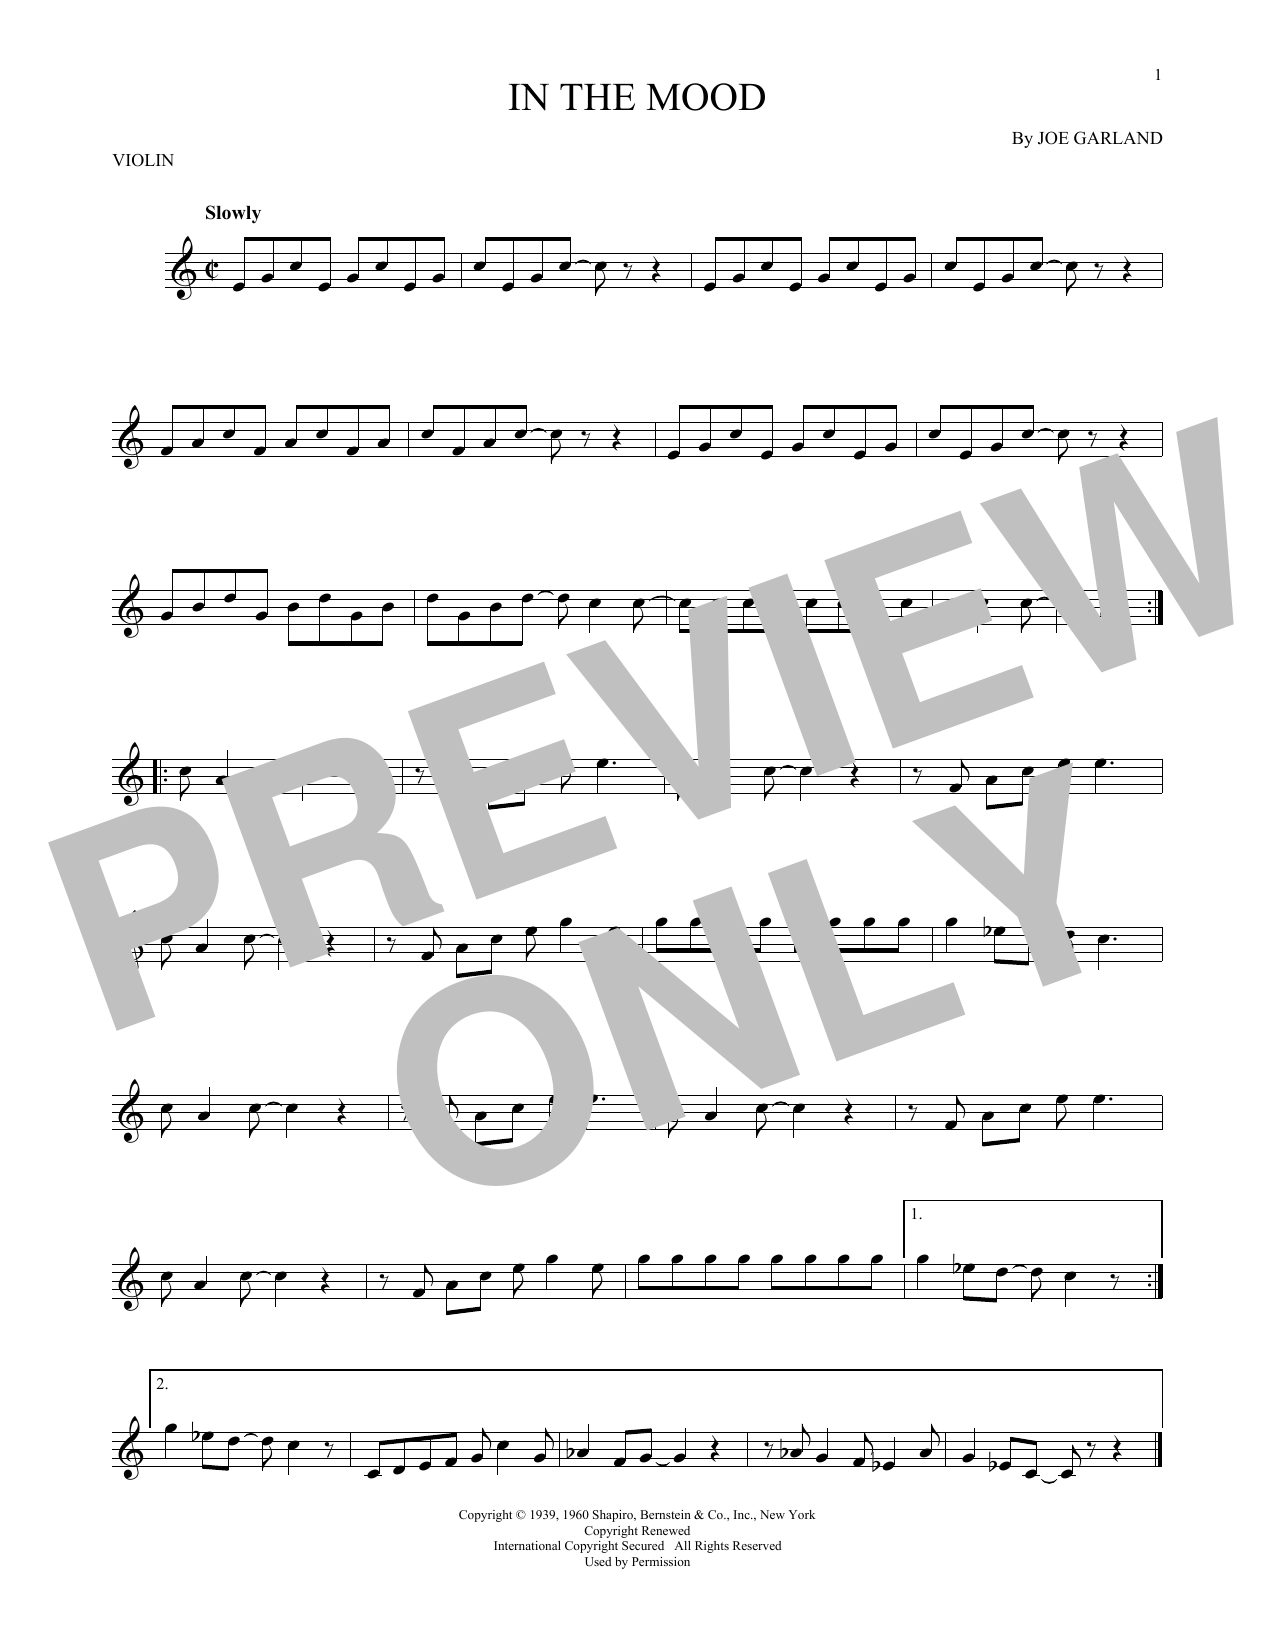 Joe Garland In The Mood Sheet Music Notes & Chords for Viola - Download or Print PDF